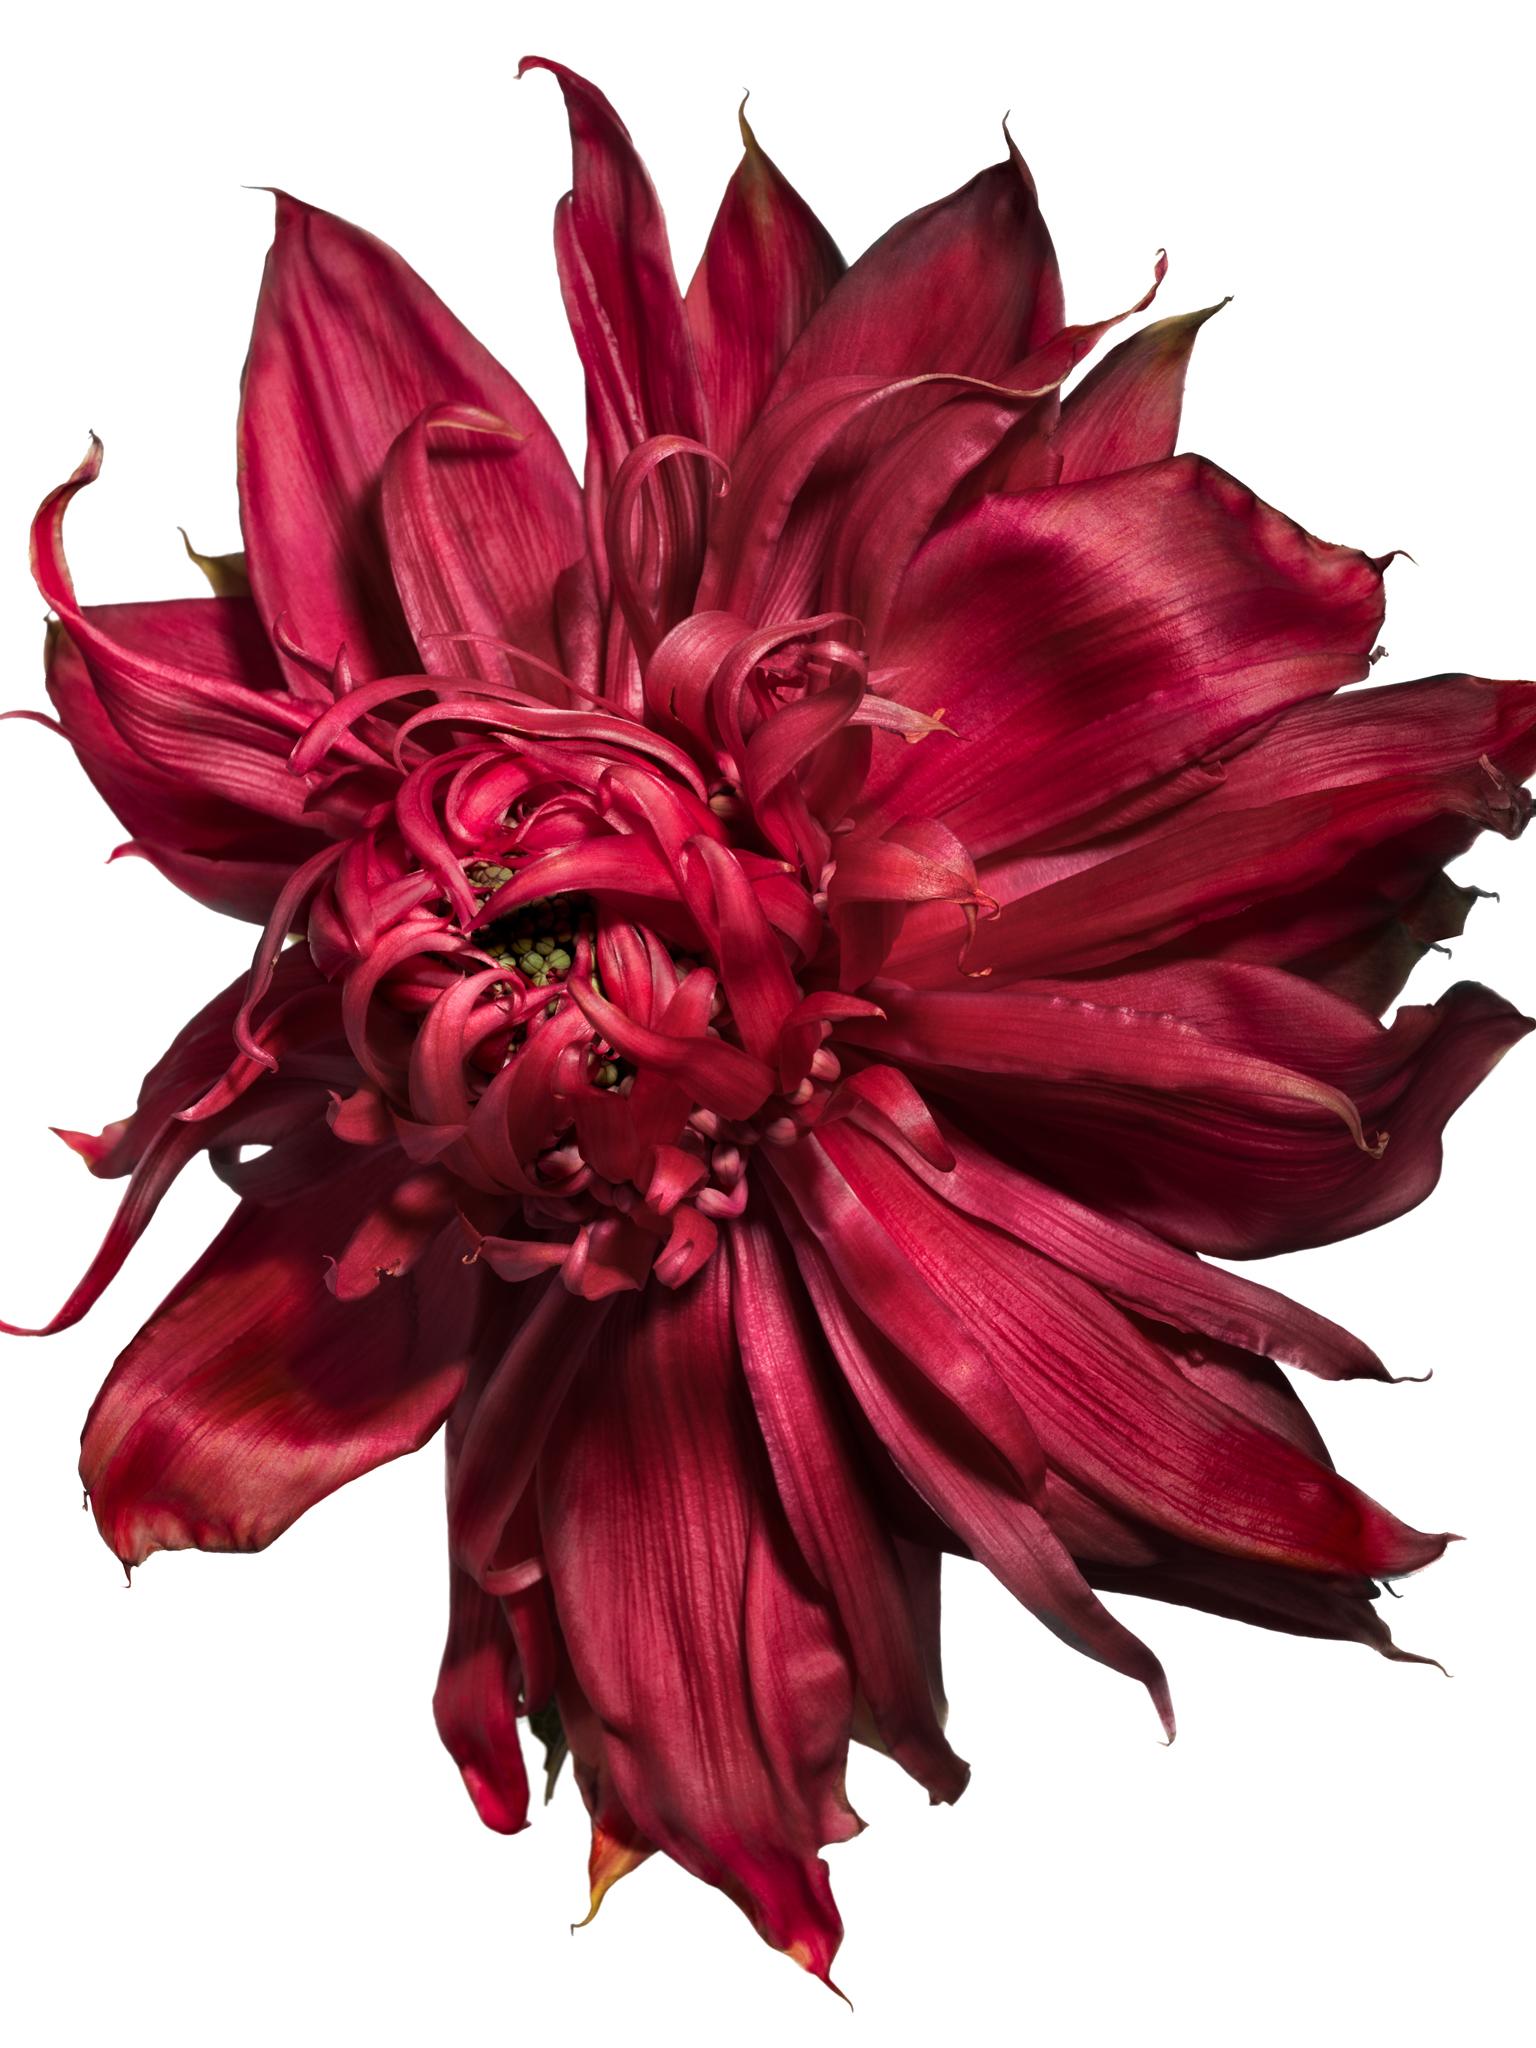 Linda Rosewall Still-Life Print – Flora Italiana ( Waratah Red) - Großformatige botanische Stilllebenfotografie